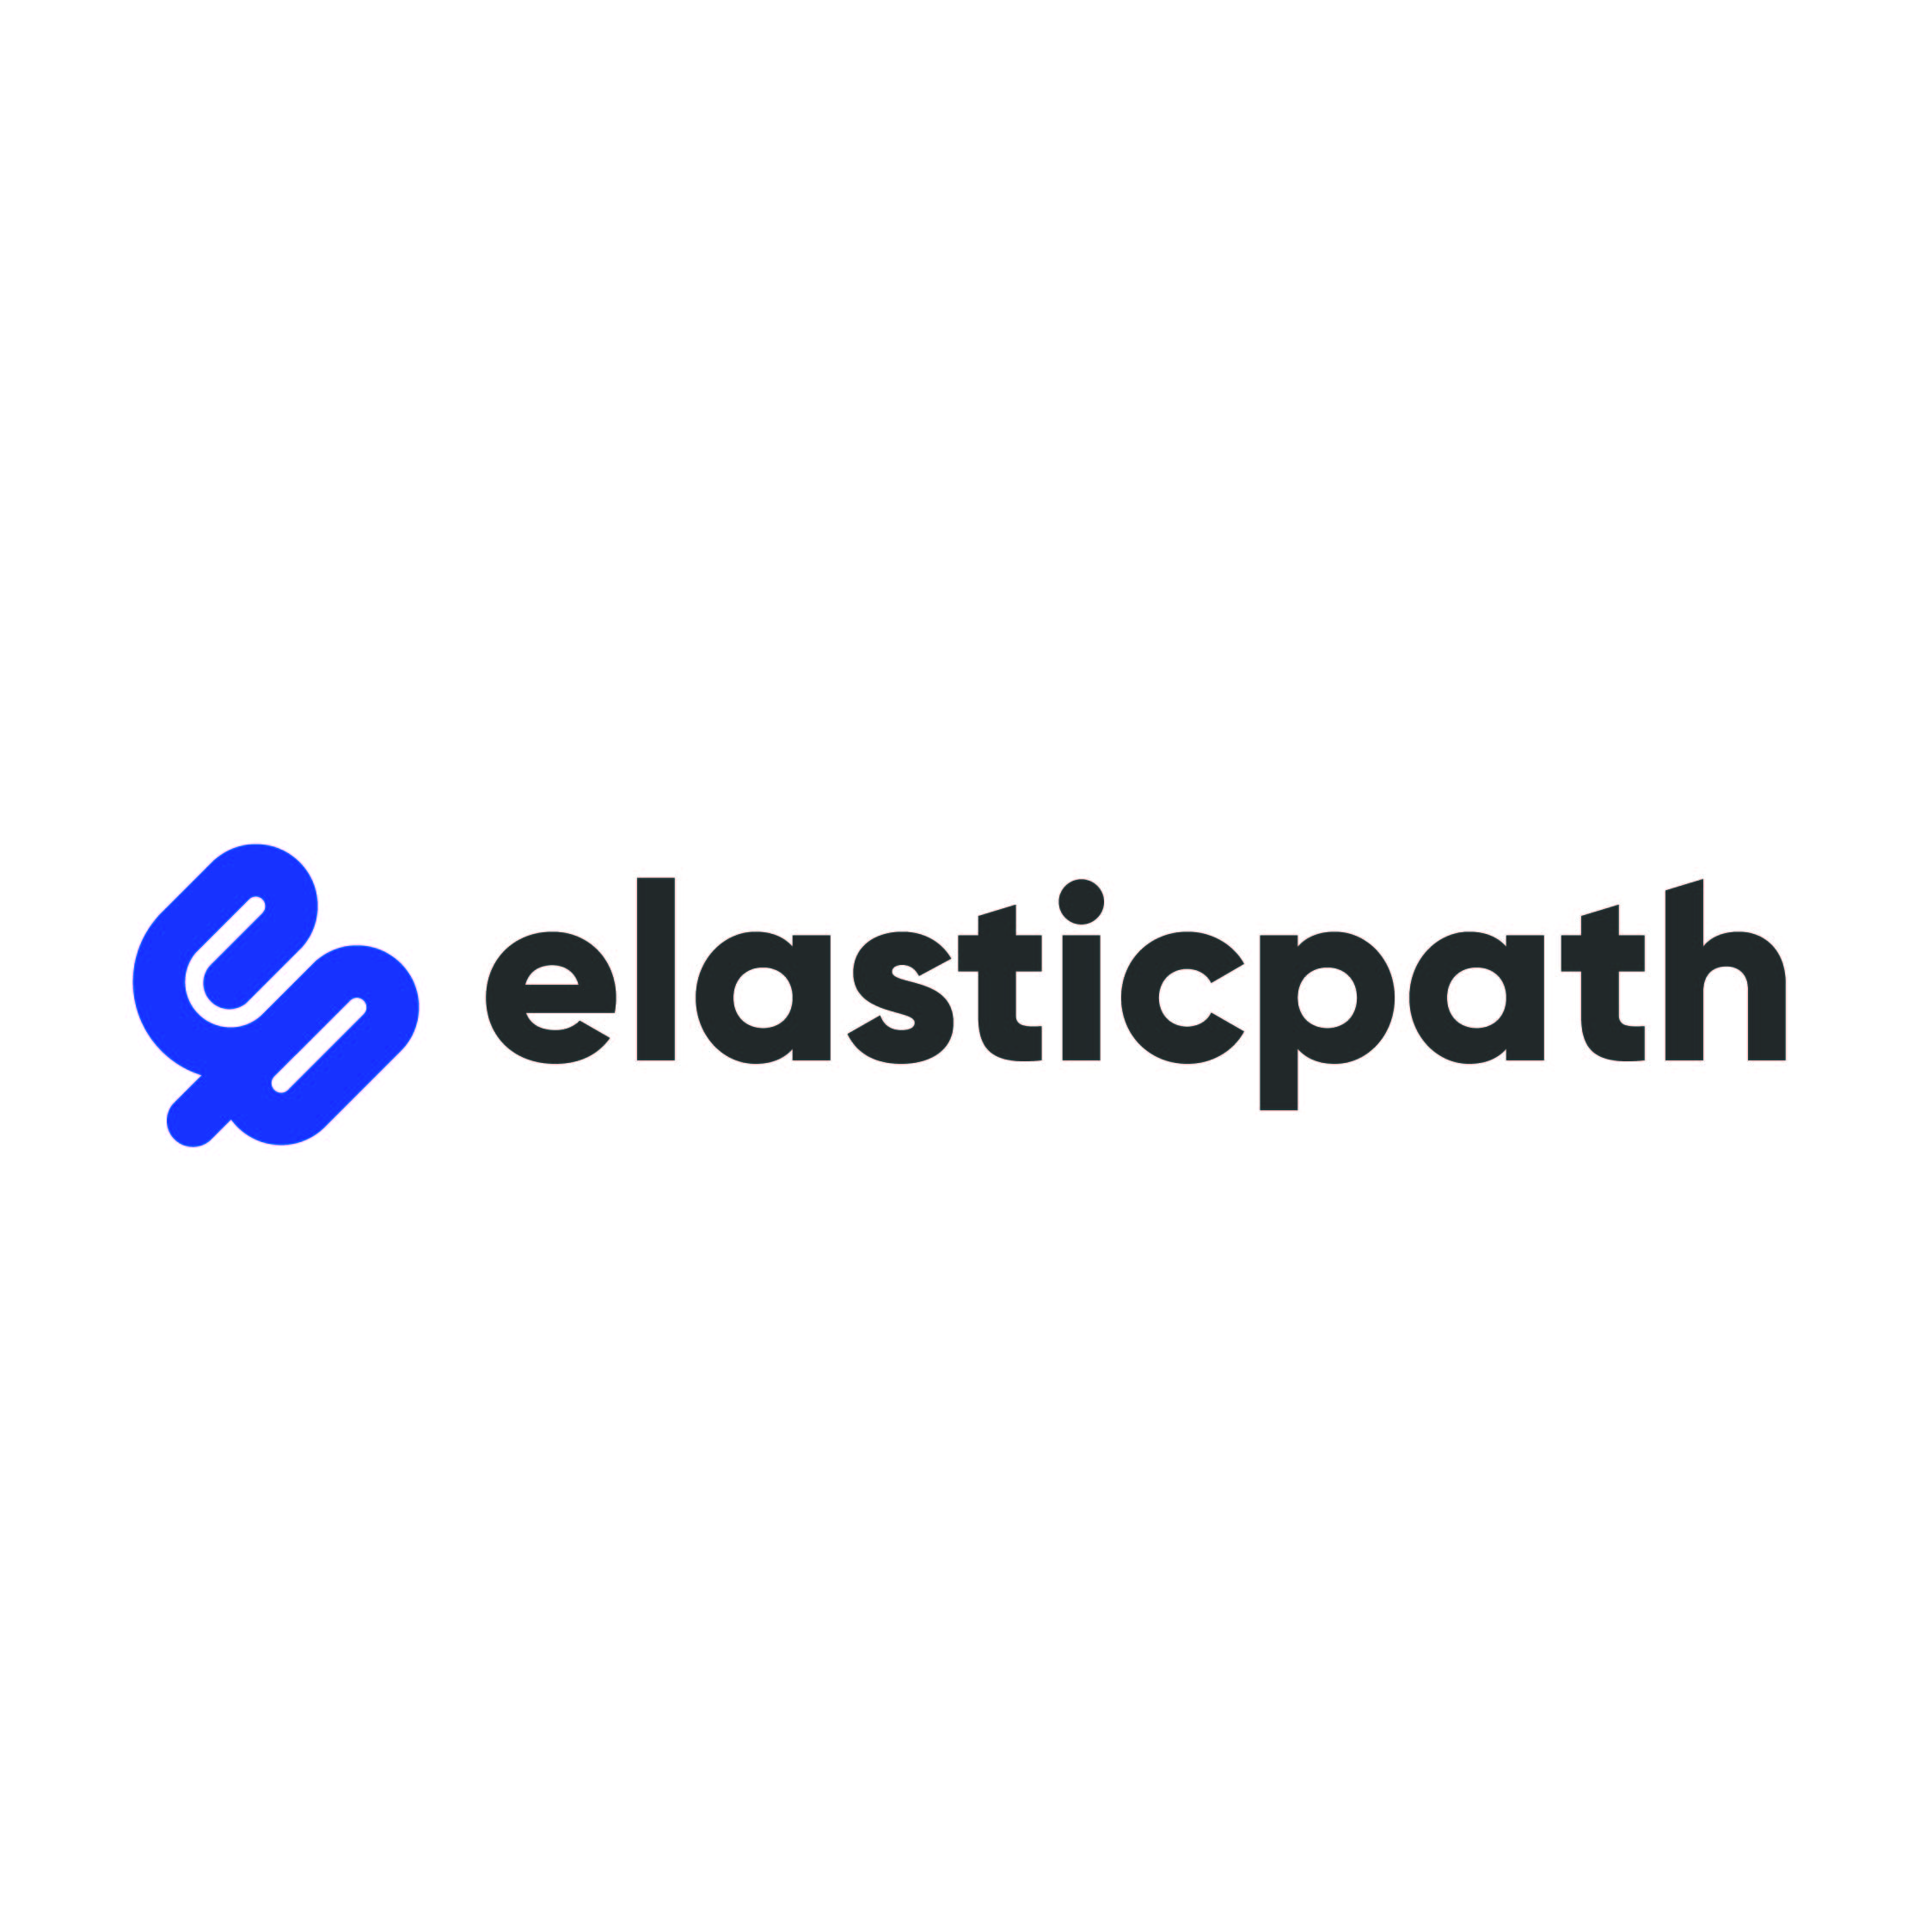 elasticpath.jpg